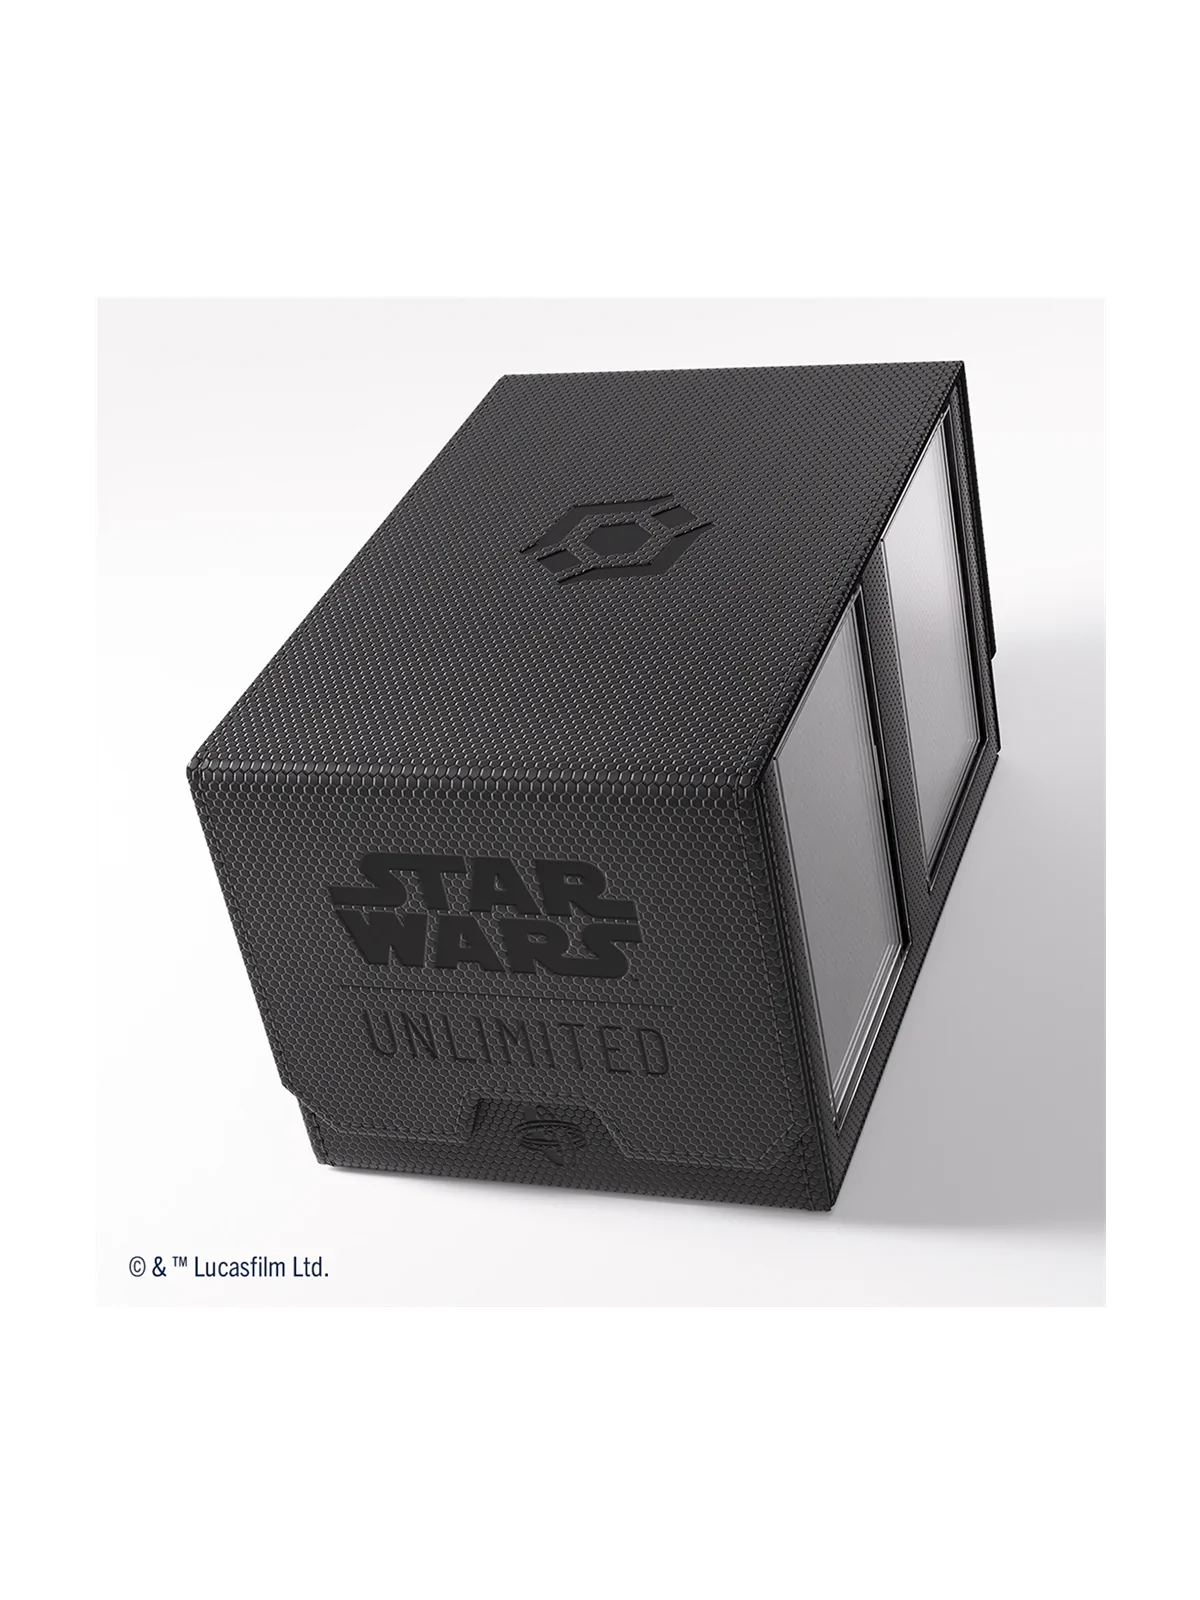 Comprar Star Wars: Unlimited Double Deck Pod Black barato al mejor pre